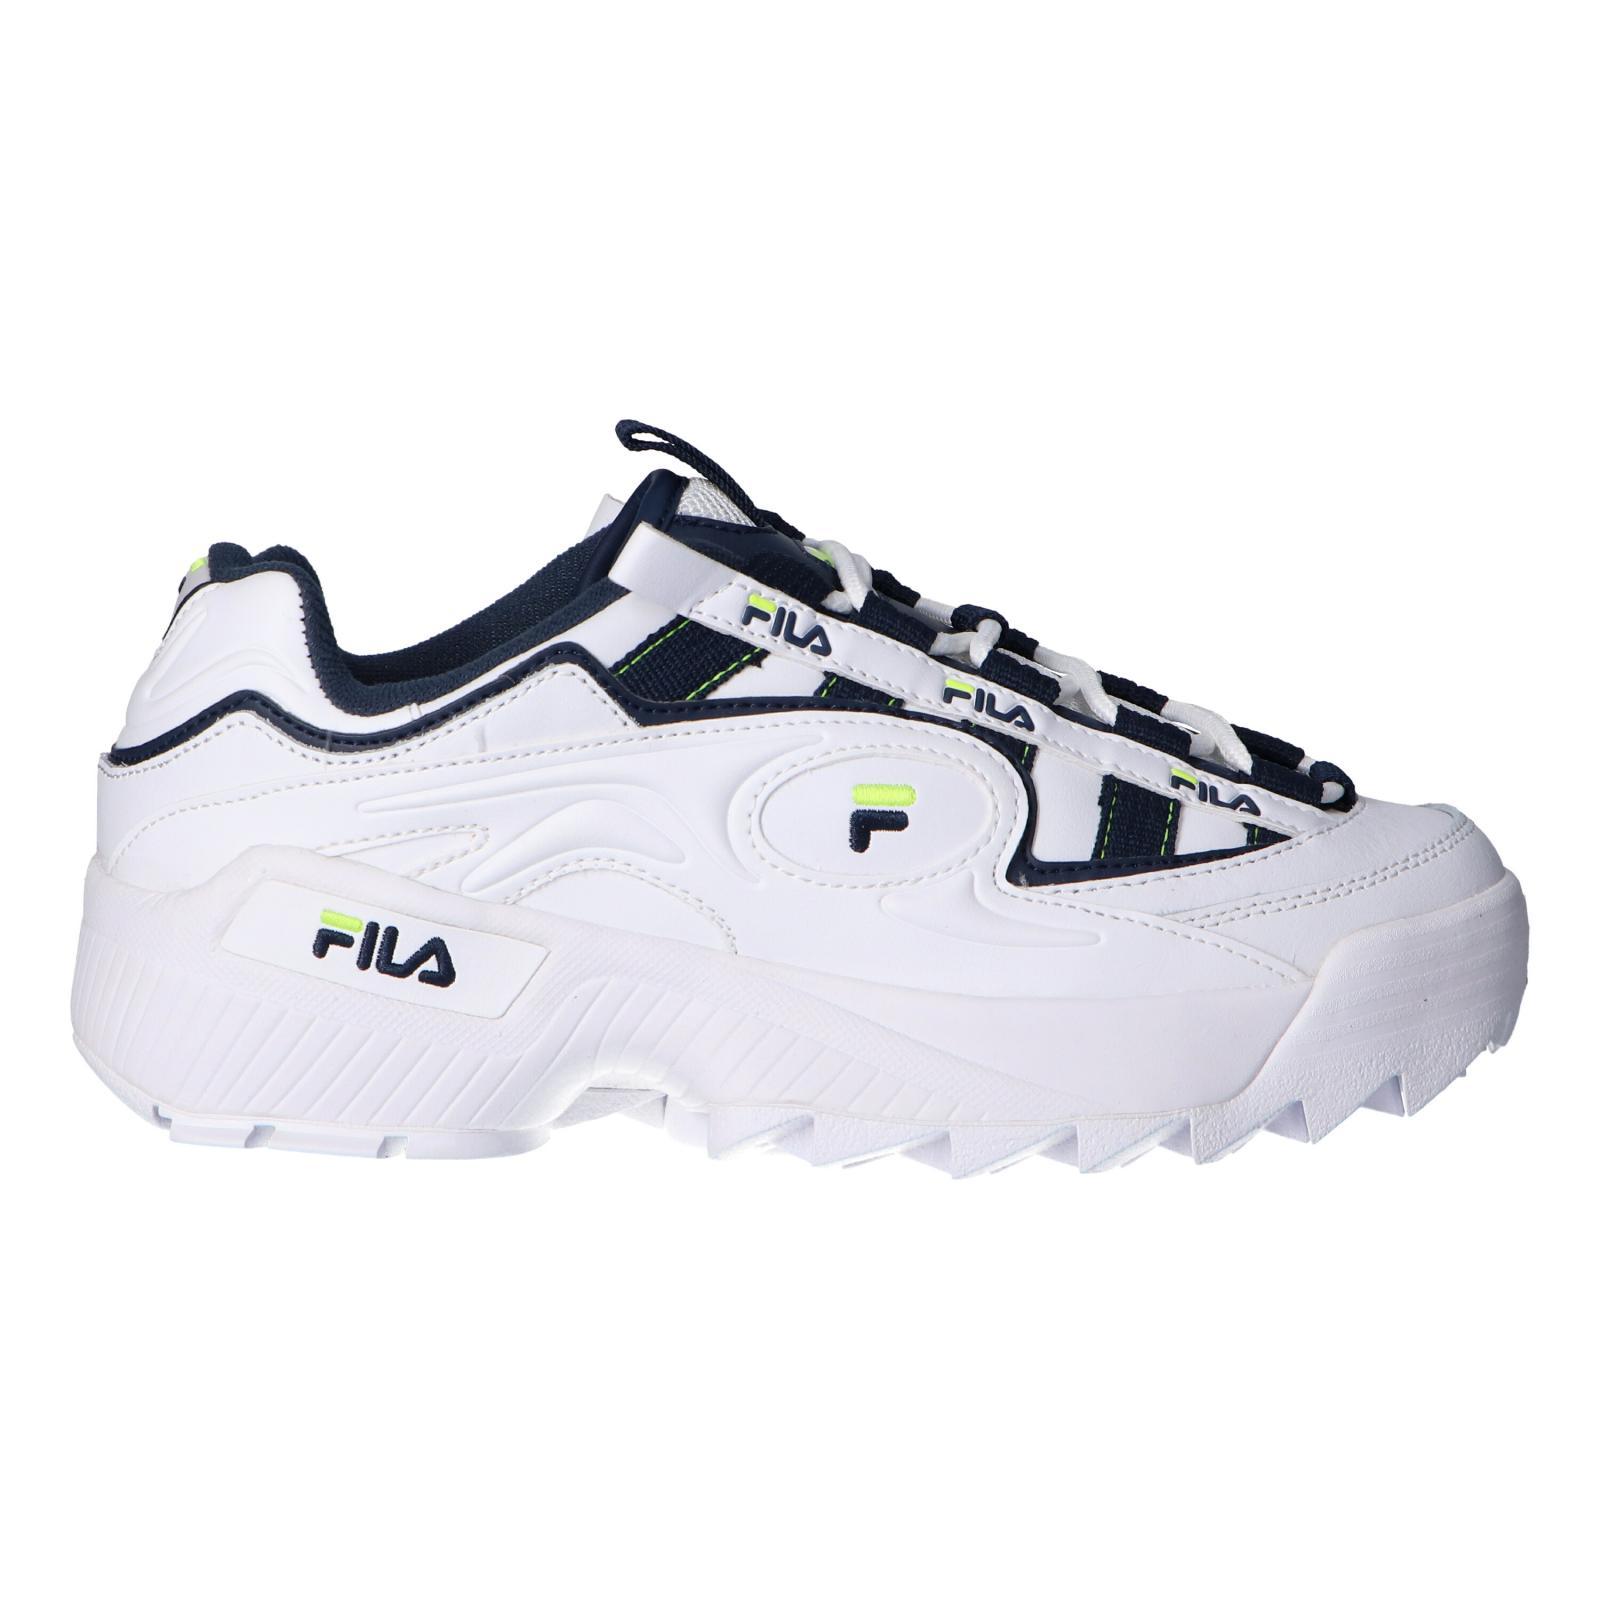 Sports shoes man FILA 1010907 92E D FORMATION WHITE NAVY multibella